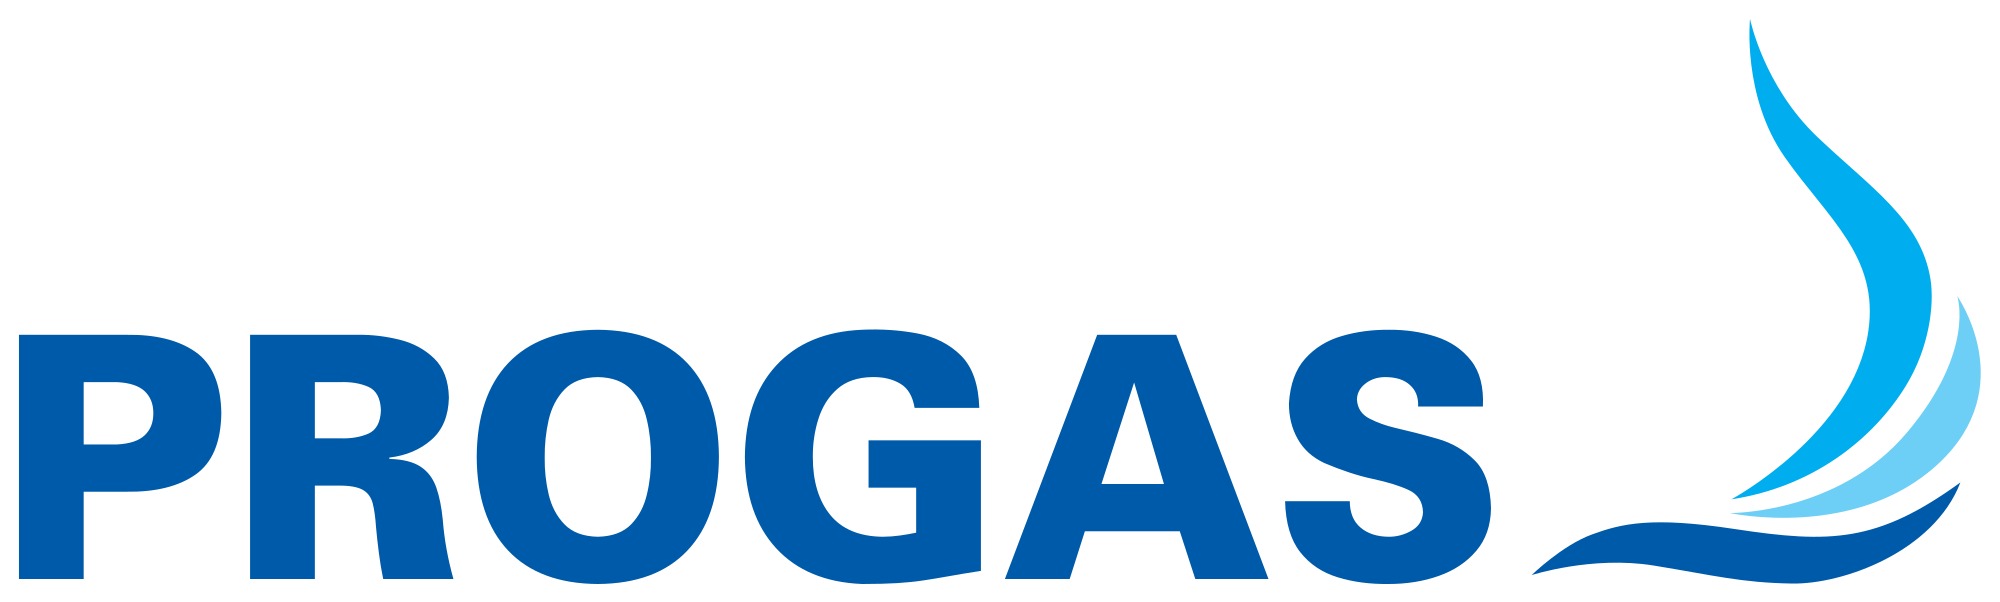 progas_logo